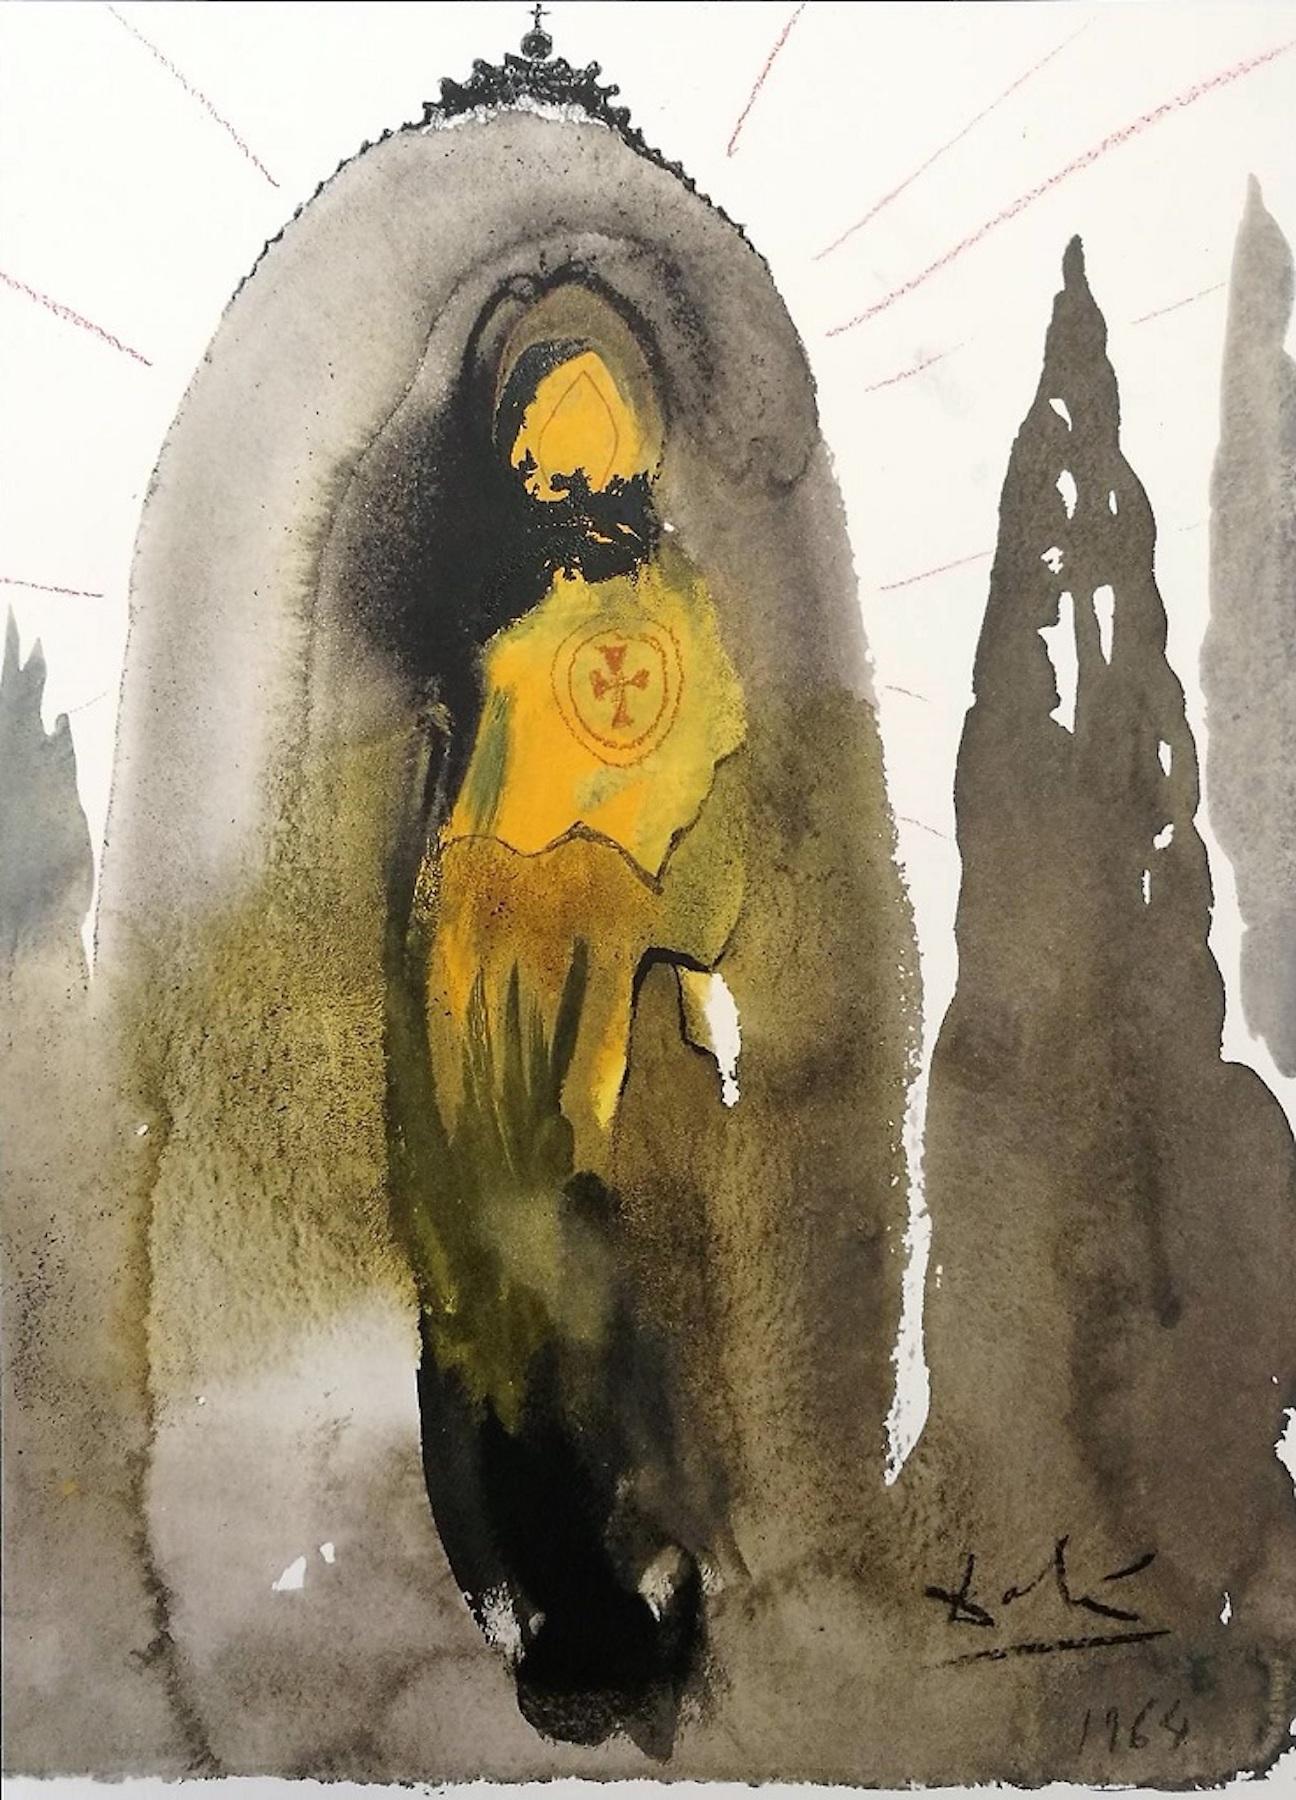 Salvador Dalí Print – Quis ascendet in montem Domini? - Original Lithograph From "Biblia Sacra" - 1964